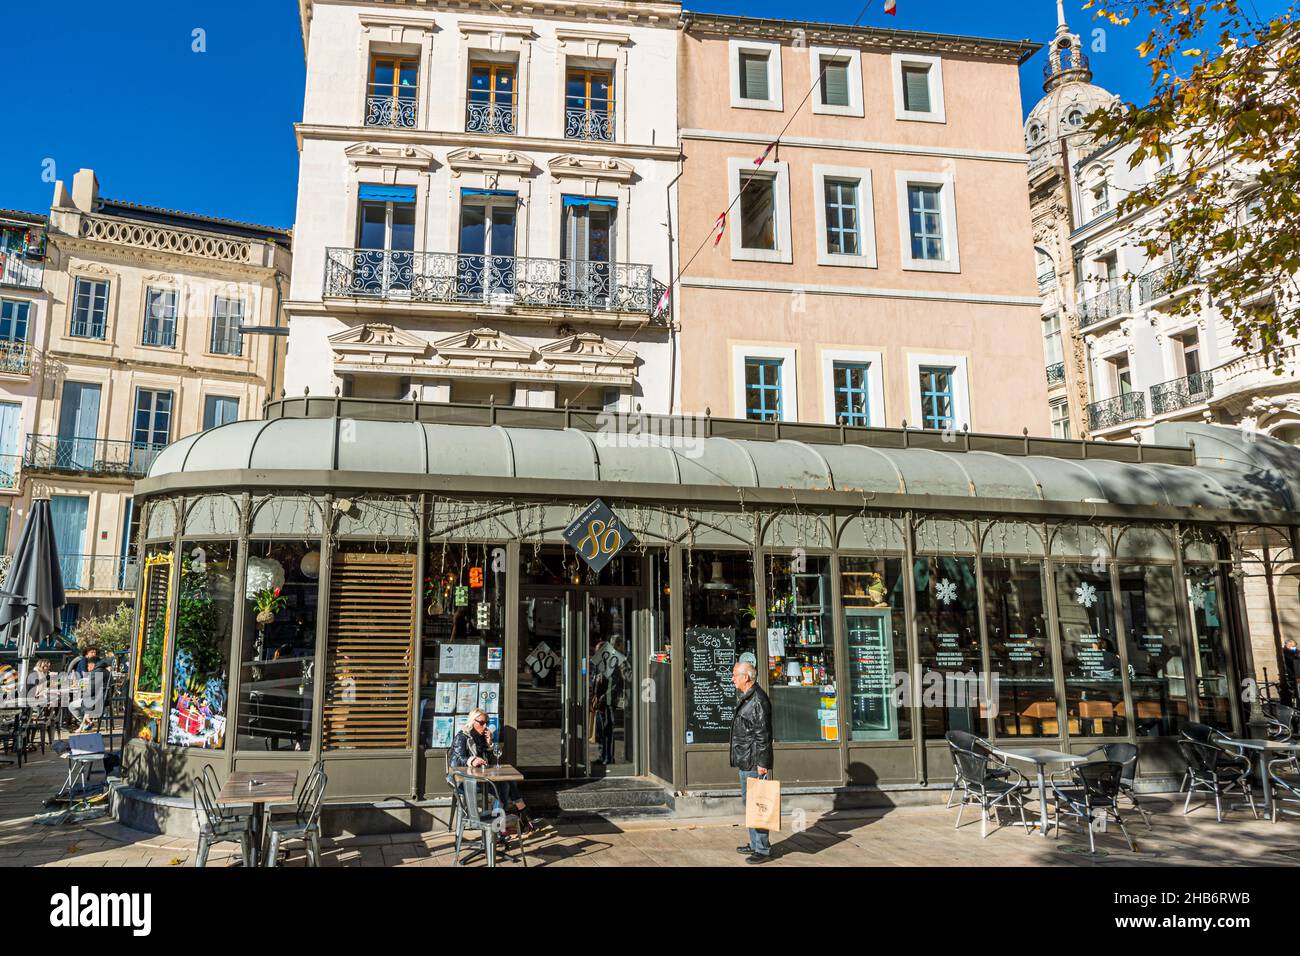 Restaurant Quaire Vingtneuf 89 in Narbonne, France Stock Photo